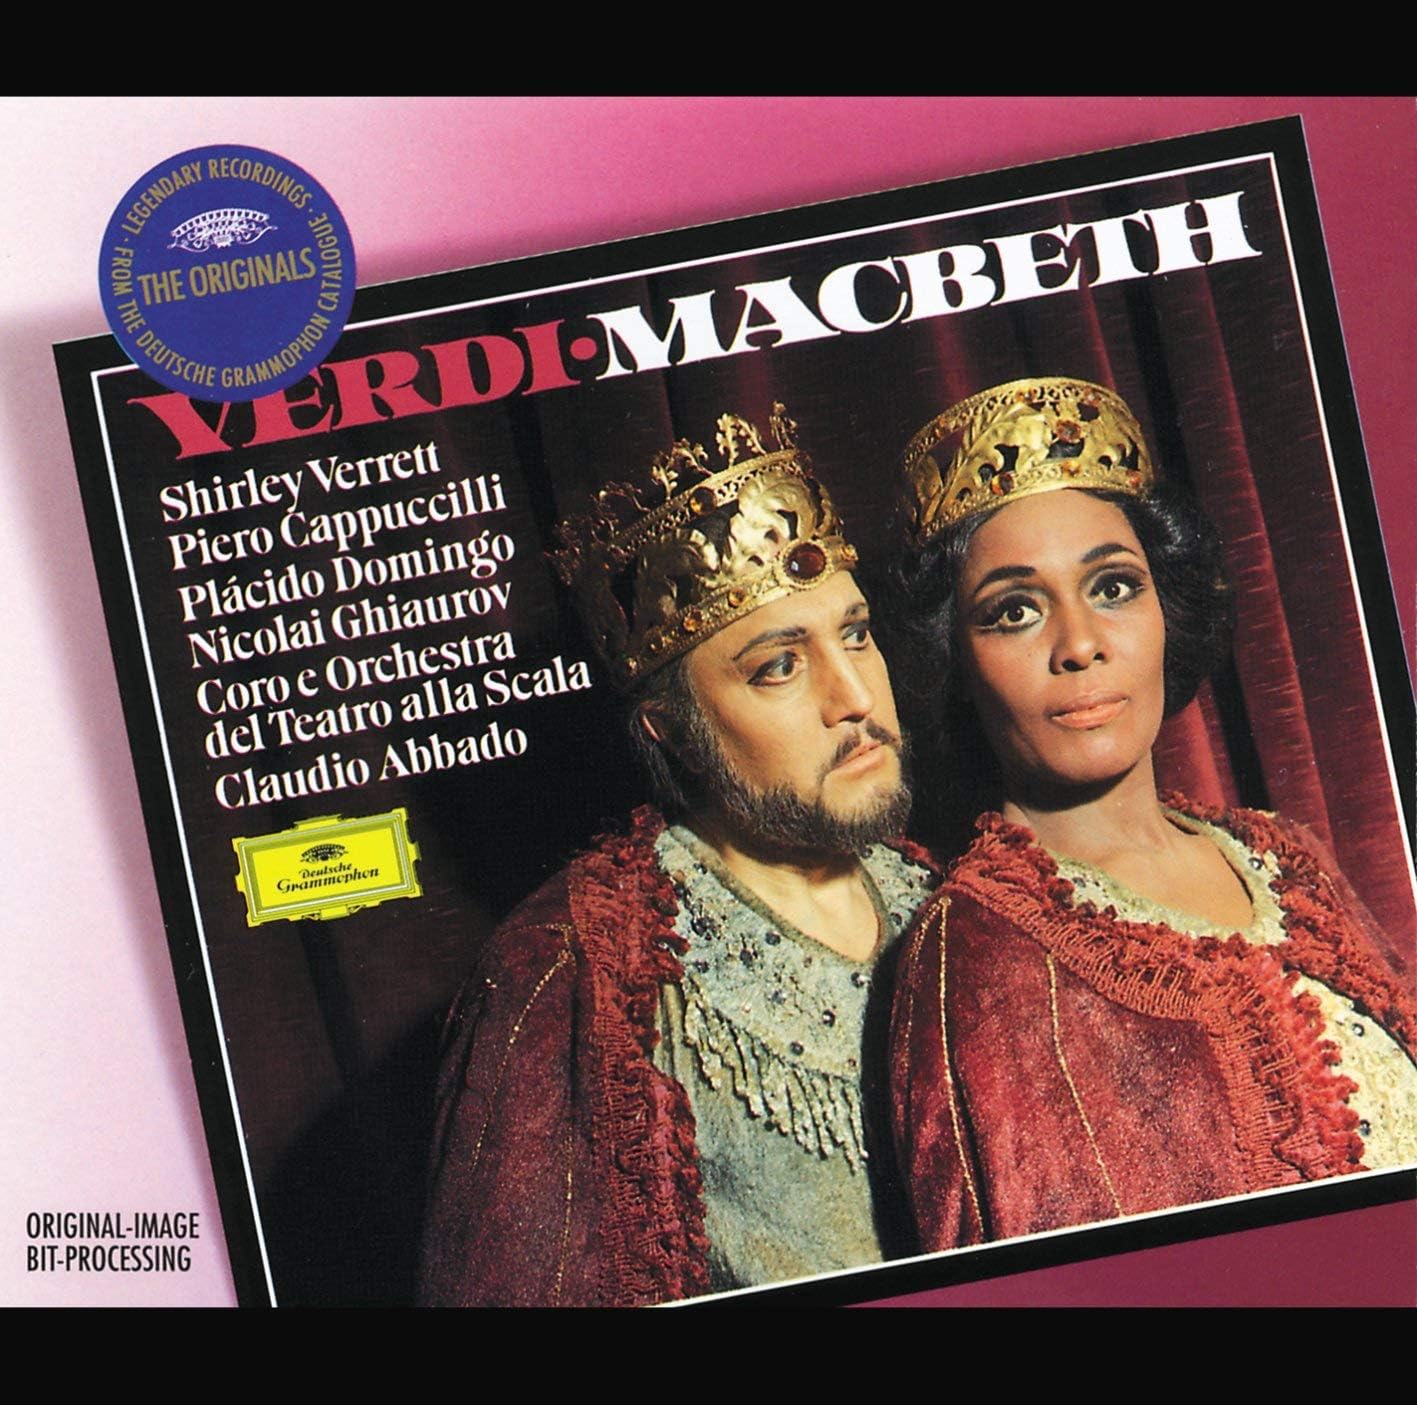 Verdi - Macbeth | Giuseppe Verdi, Shirley Verrett, Piero Cappuccilli